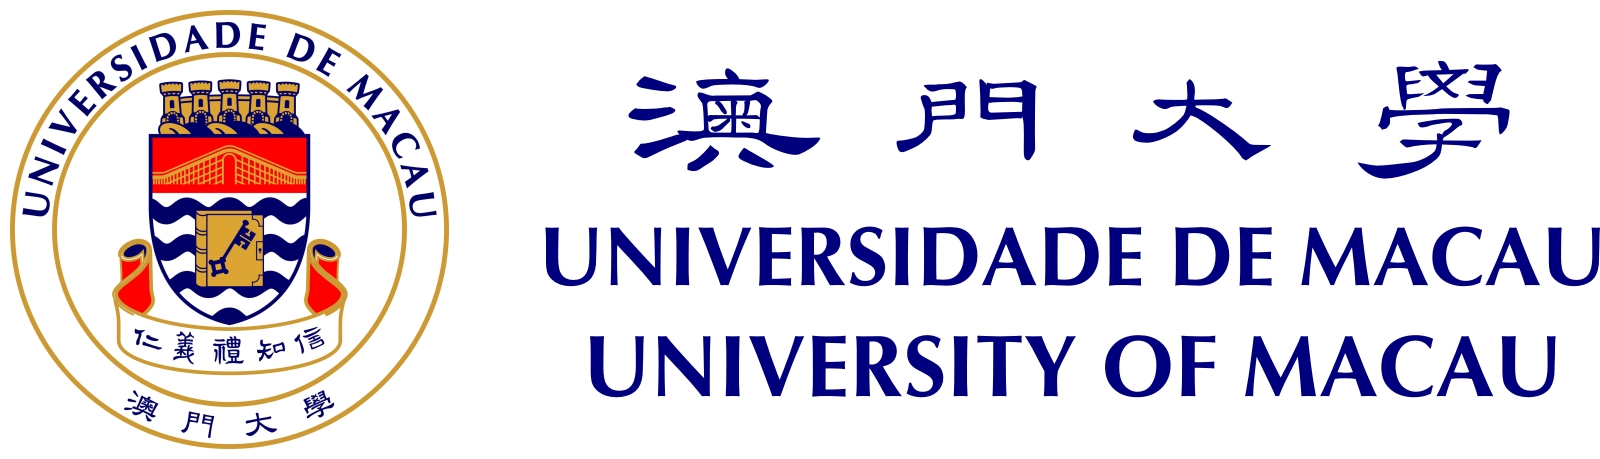 UM_Logo_Chinese_Portuguese_English_H.jpg